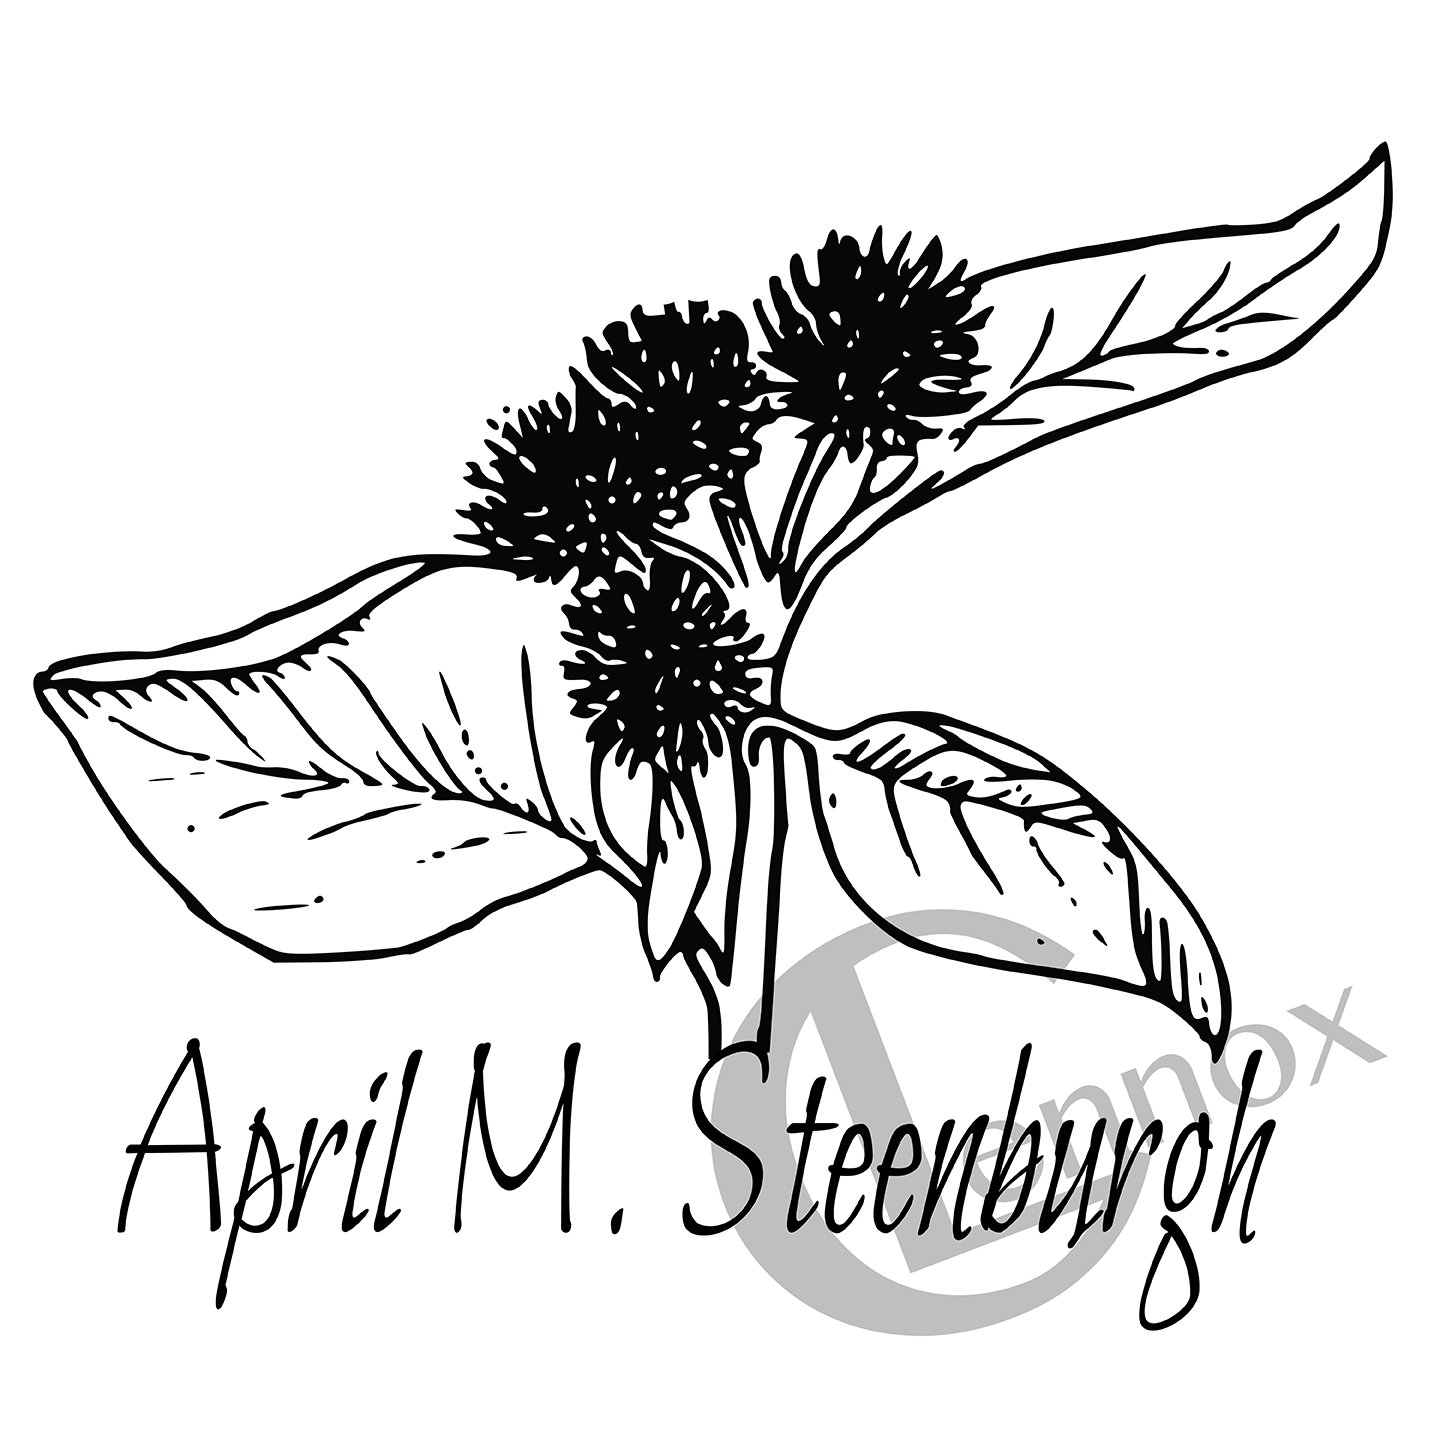  2017 April M. Steenburgh    